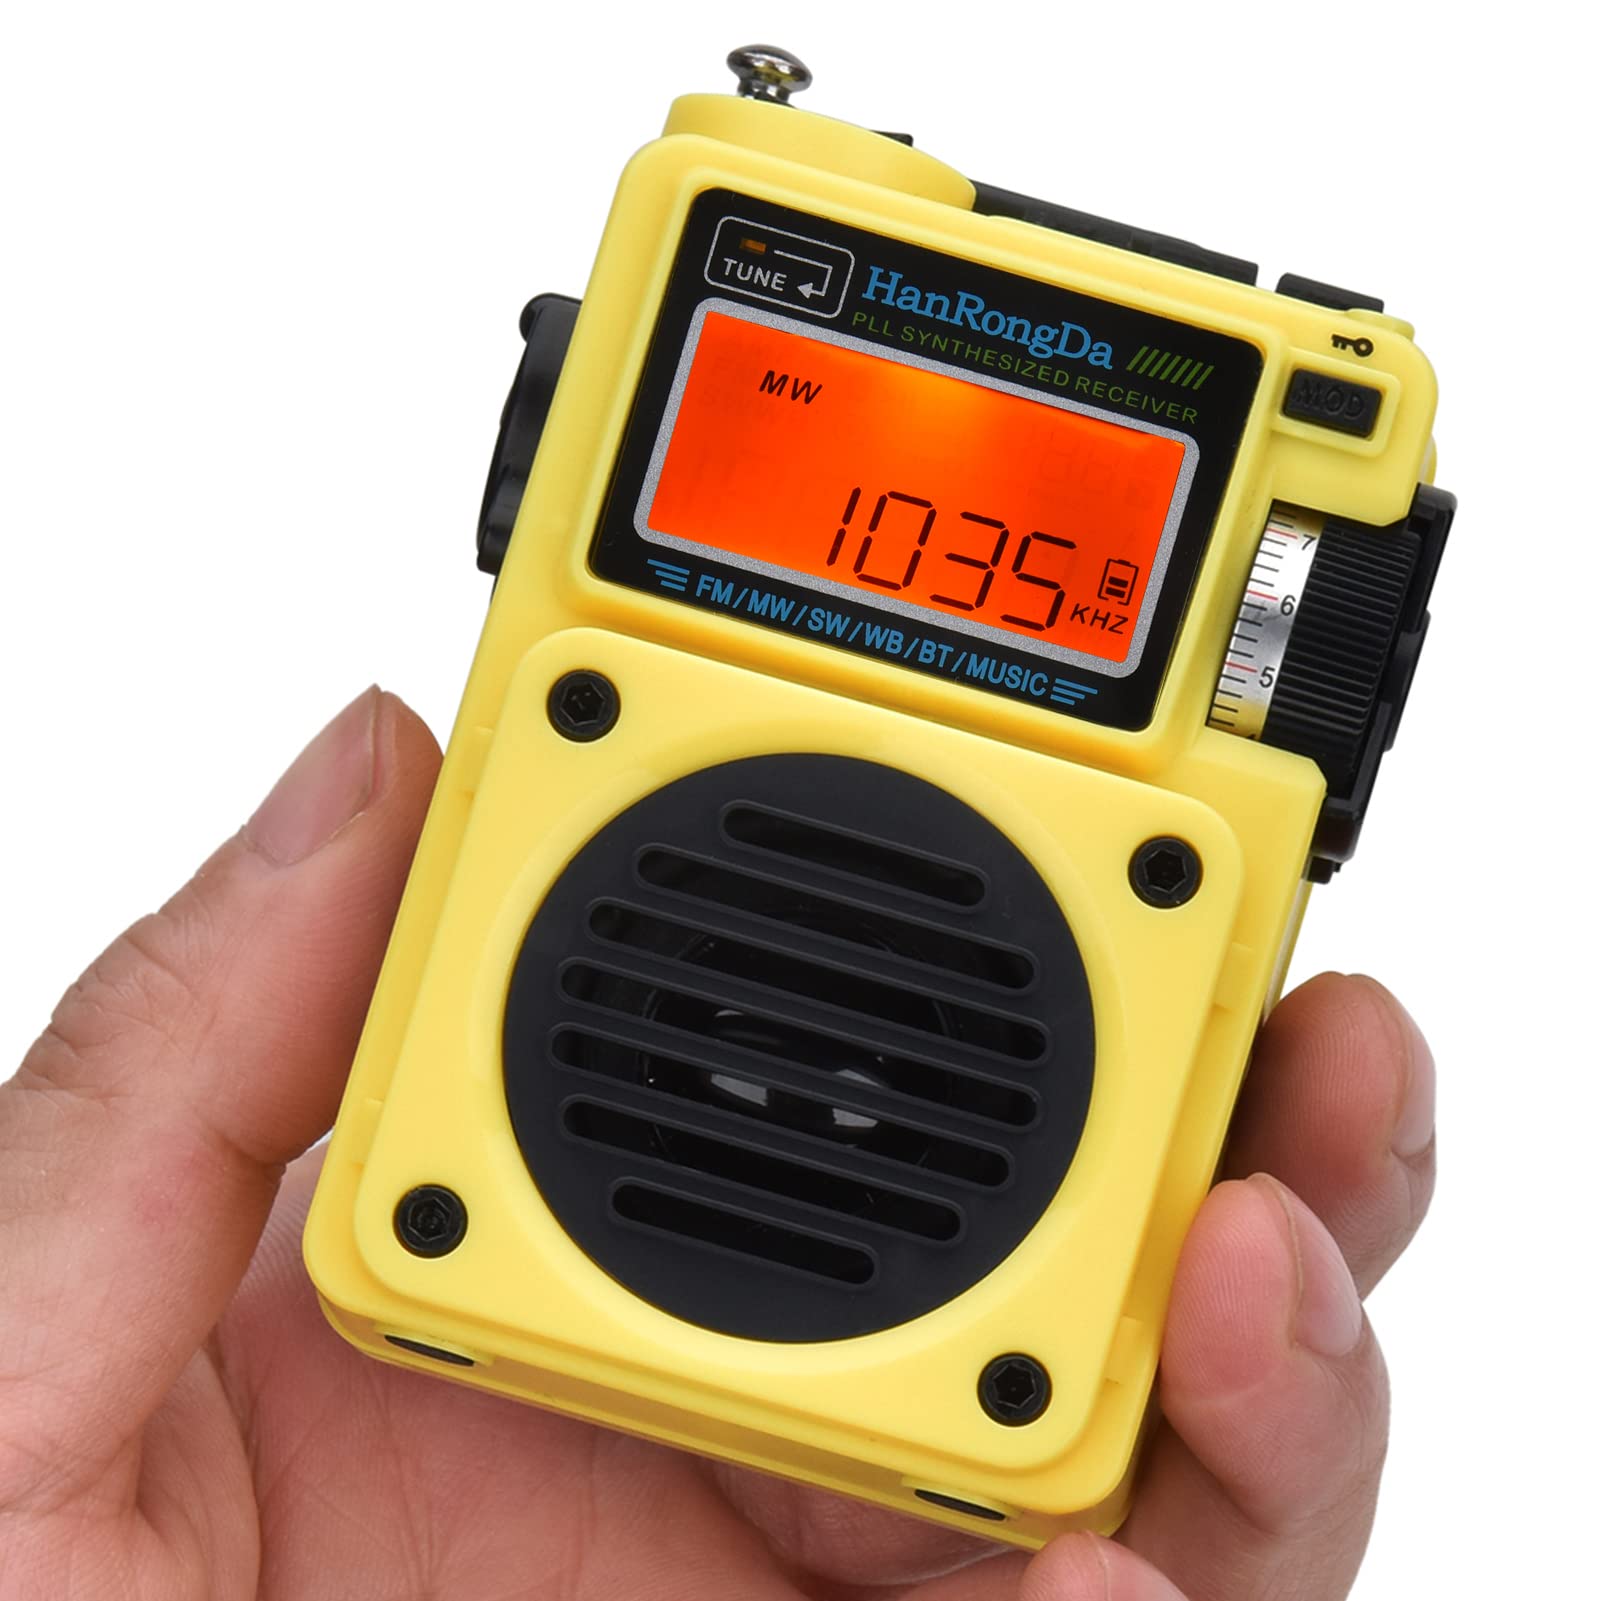 HanRongDa Bluetoothスピーカー 小型BCLラジオ MicroSDカード対応 FM/AM/短波/ワイドFM対応 充電式 MP3レトロプレーヤー タイマー デジタル時計 技適認証済 アウトドア 防災 旅行に最適 HRD701